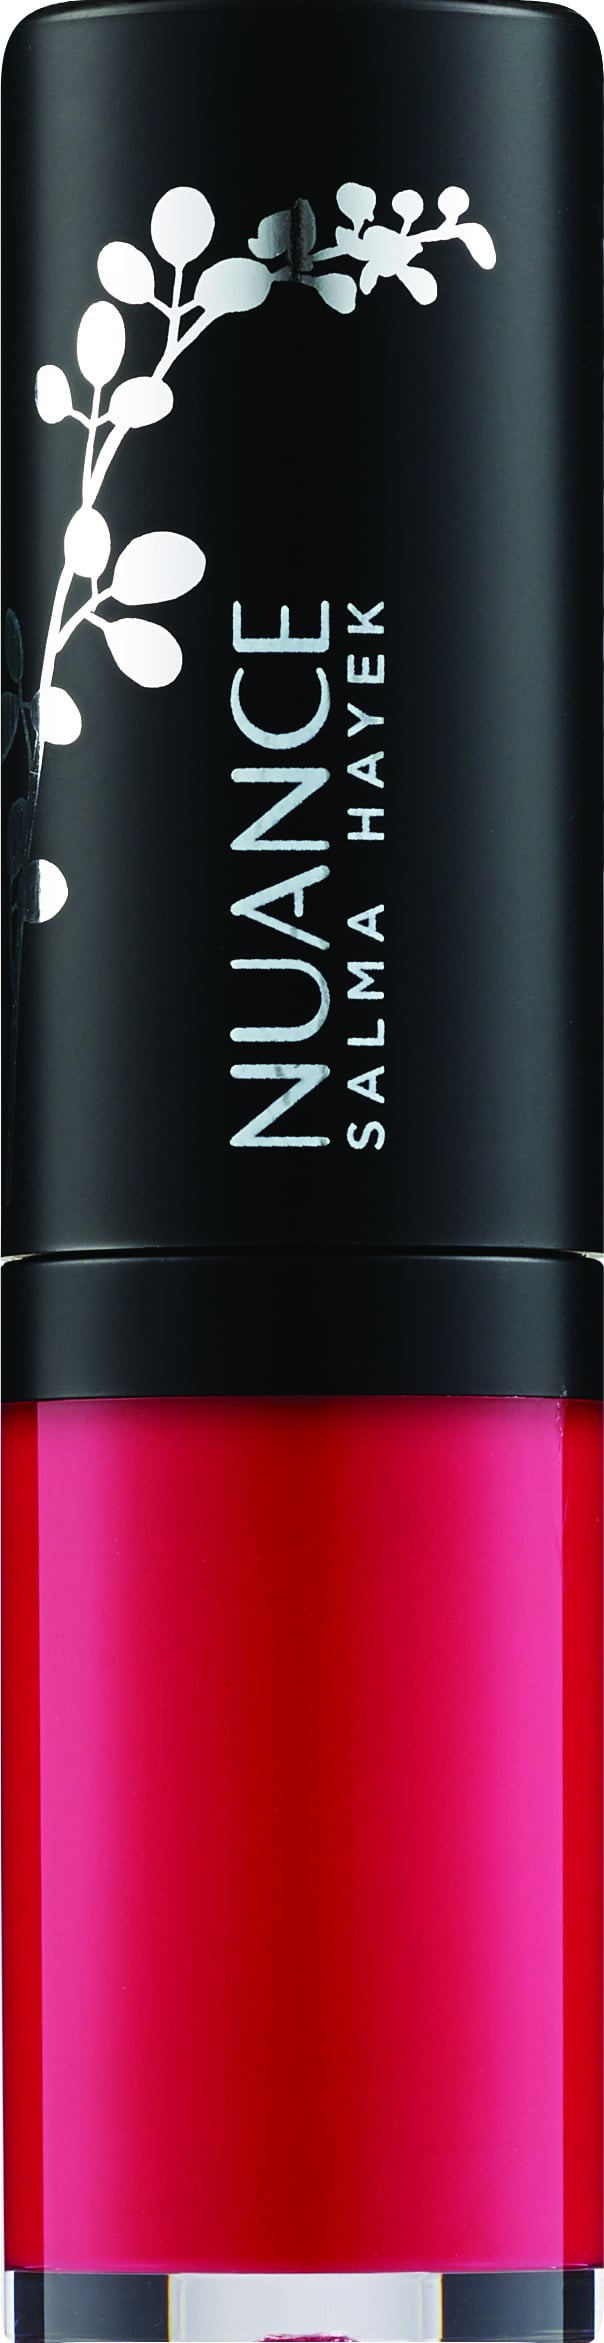 Nuance Salma Hayek True Color Plumping Liquid Lipstick in Liquid Lilly